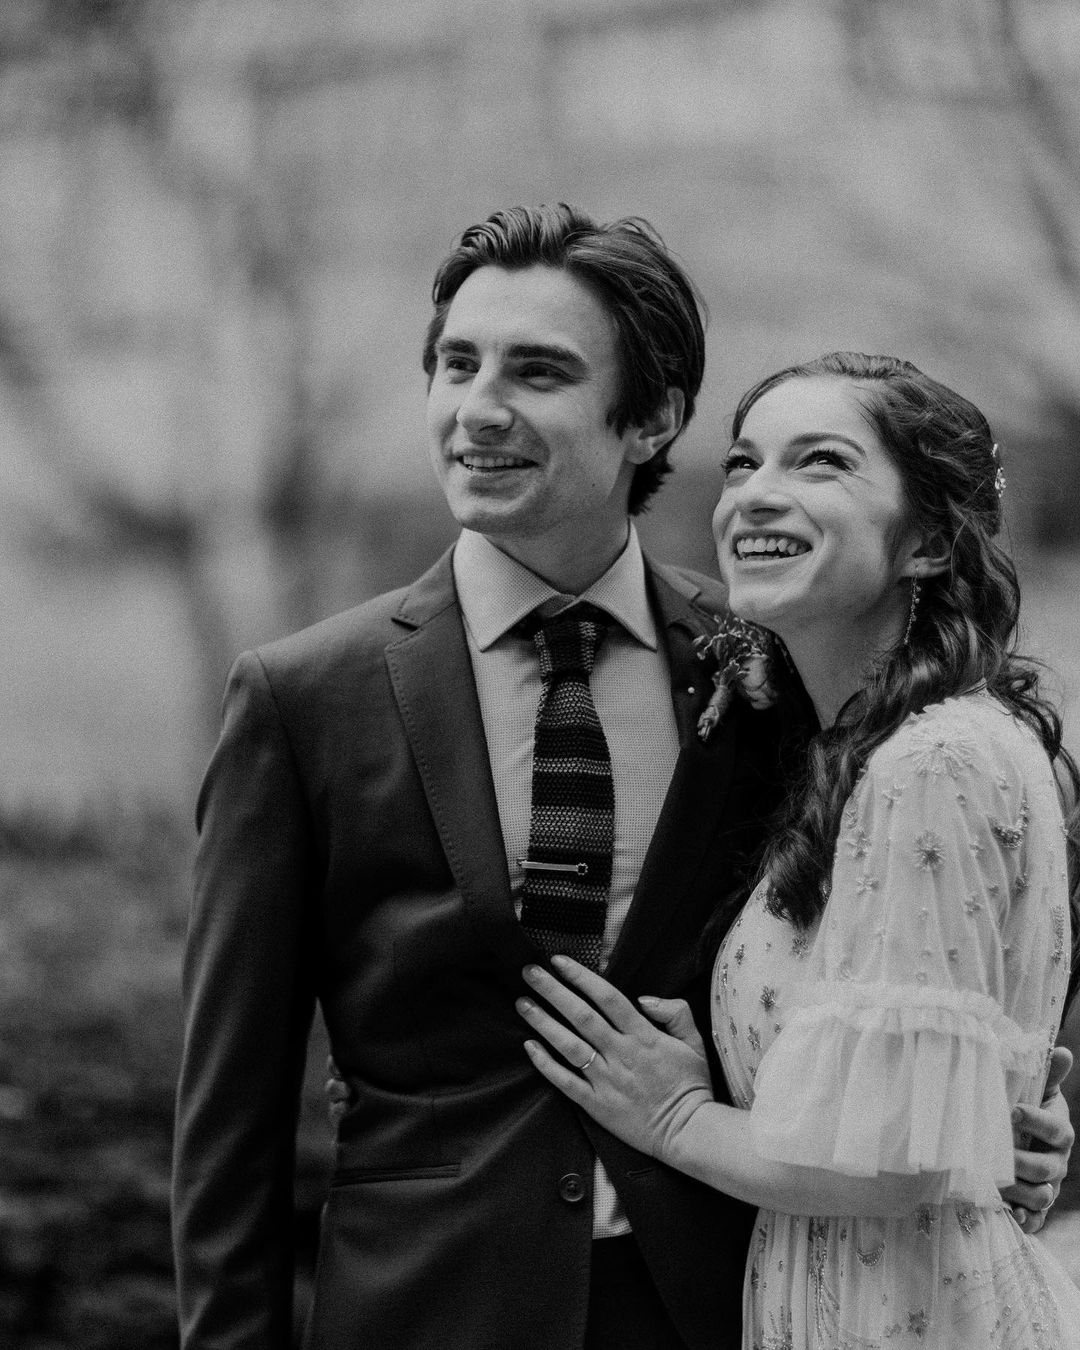 Sydney Meyer and her husband Alex Ozerov at their wedding